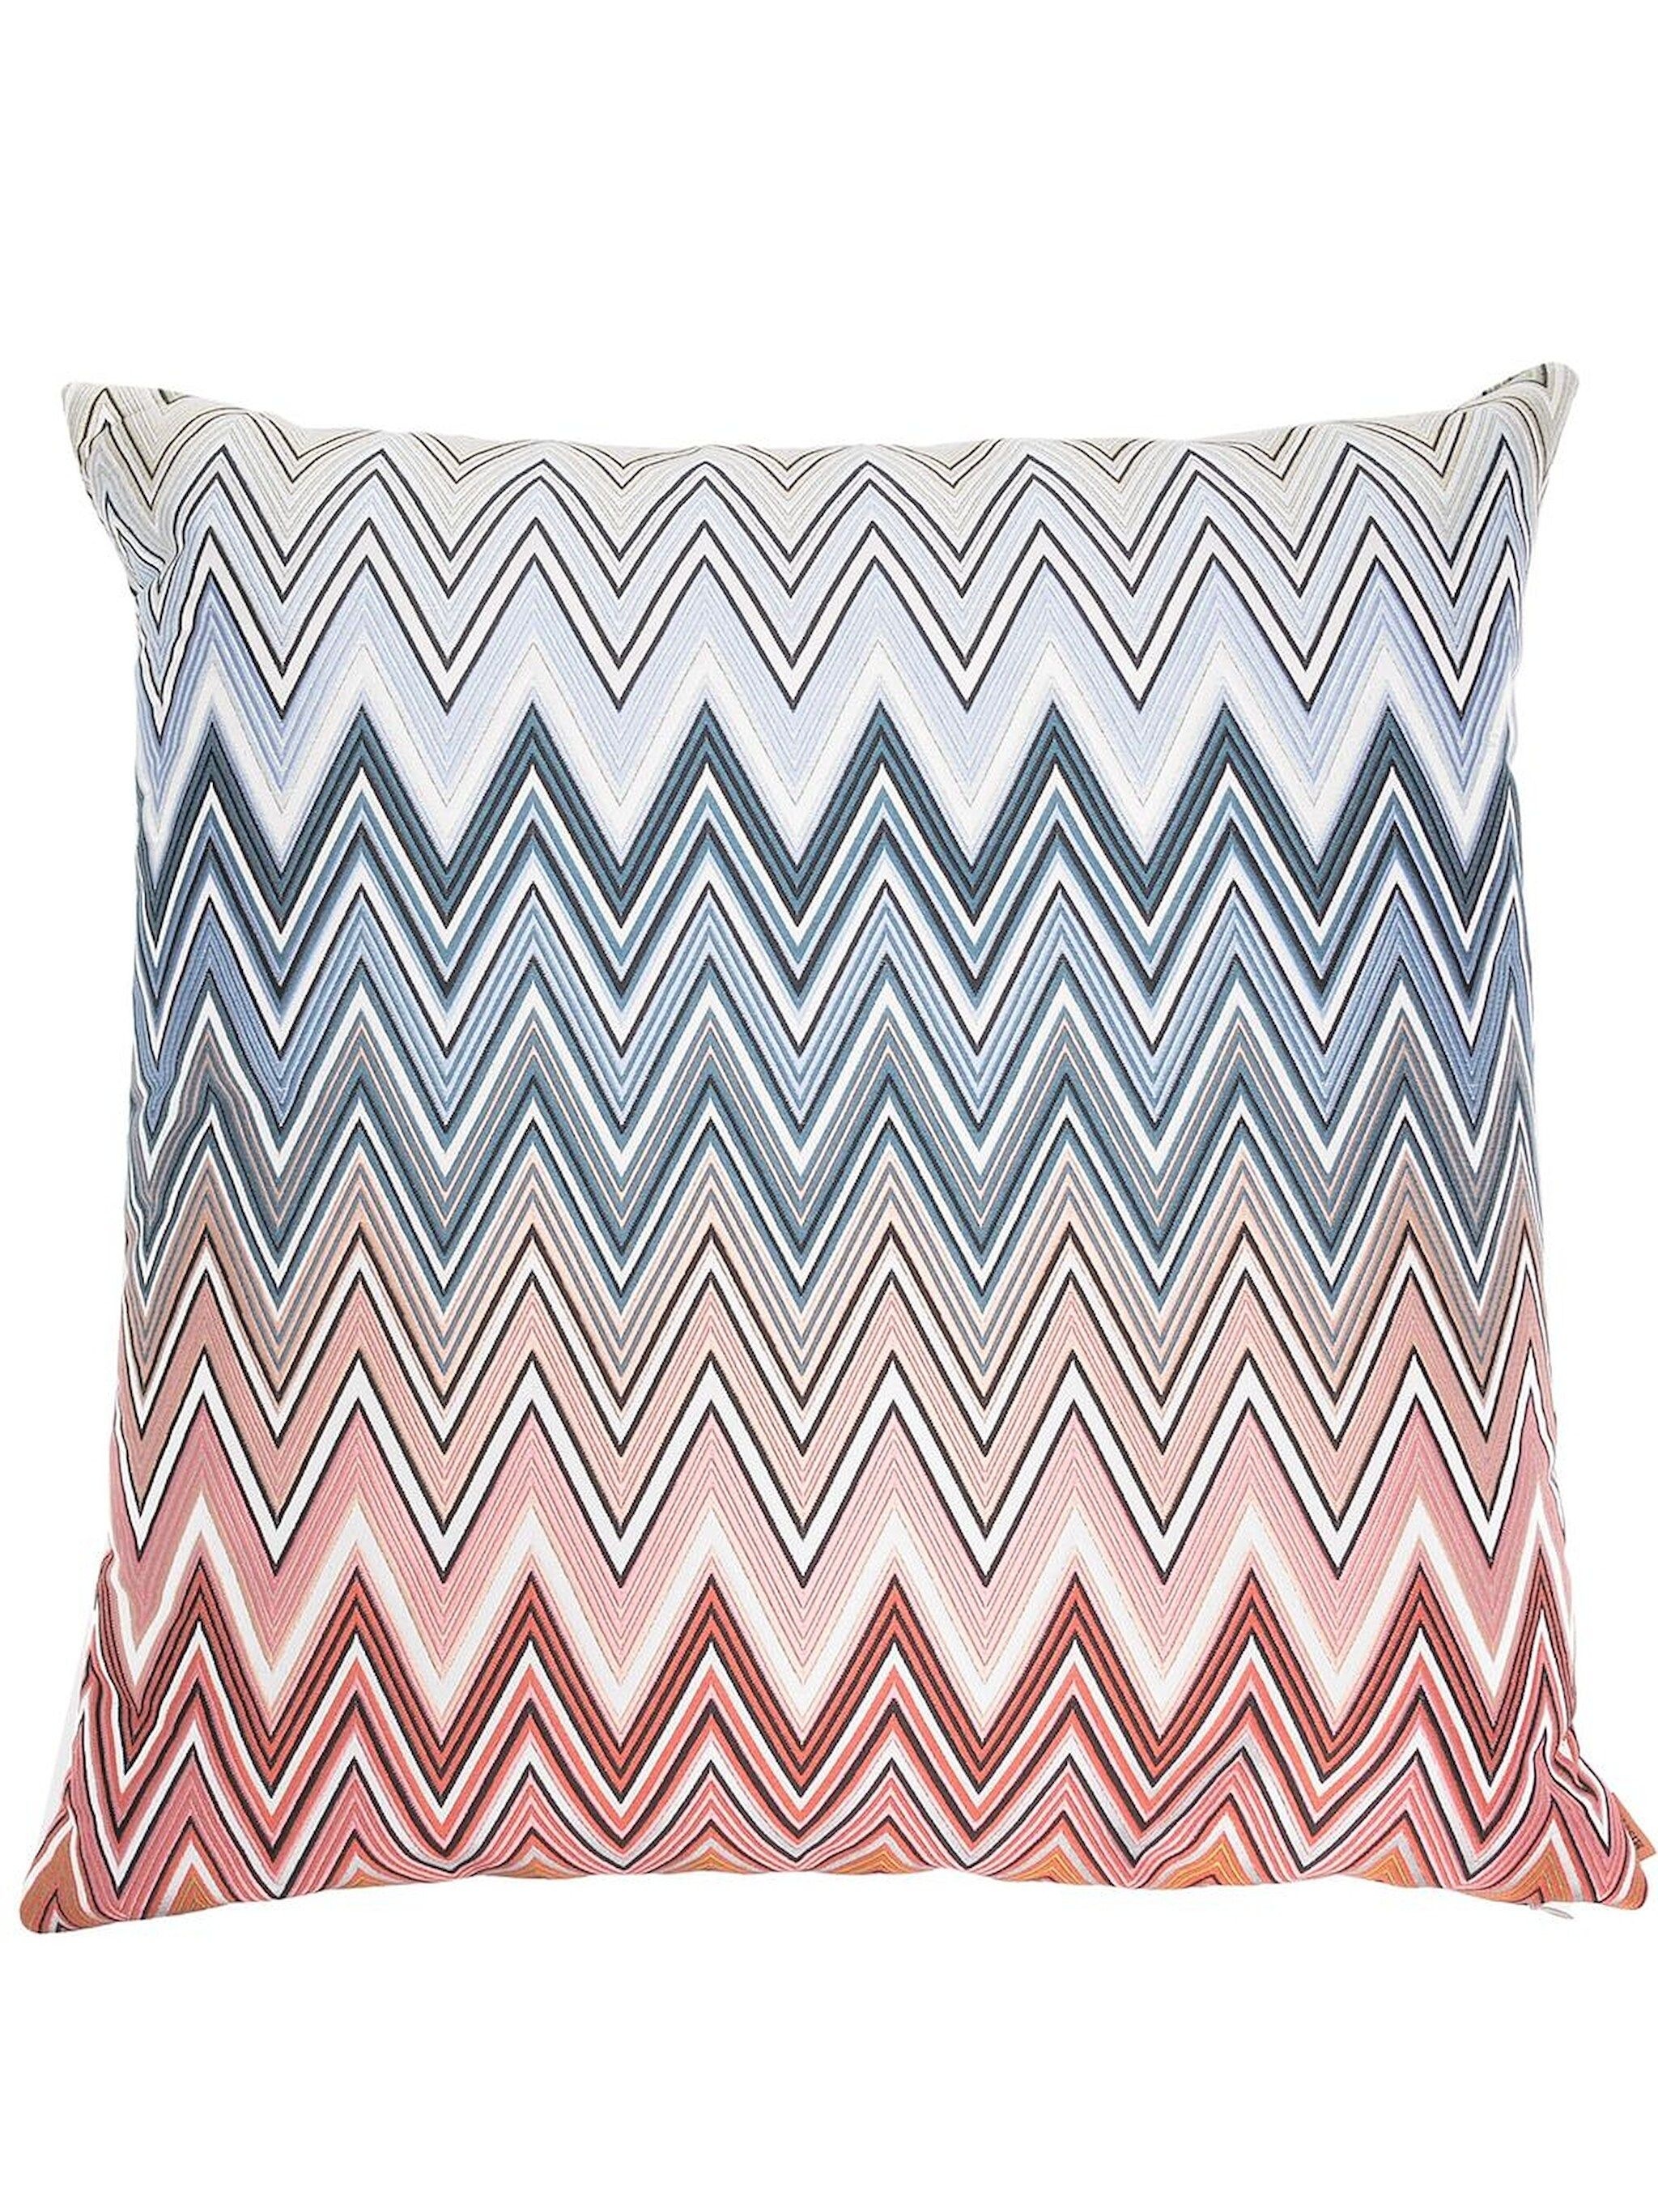 Jarris patterned cushion - 1